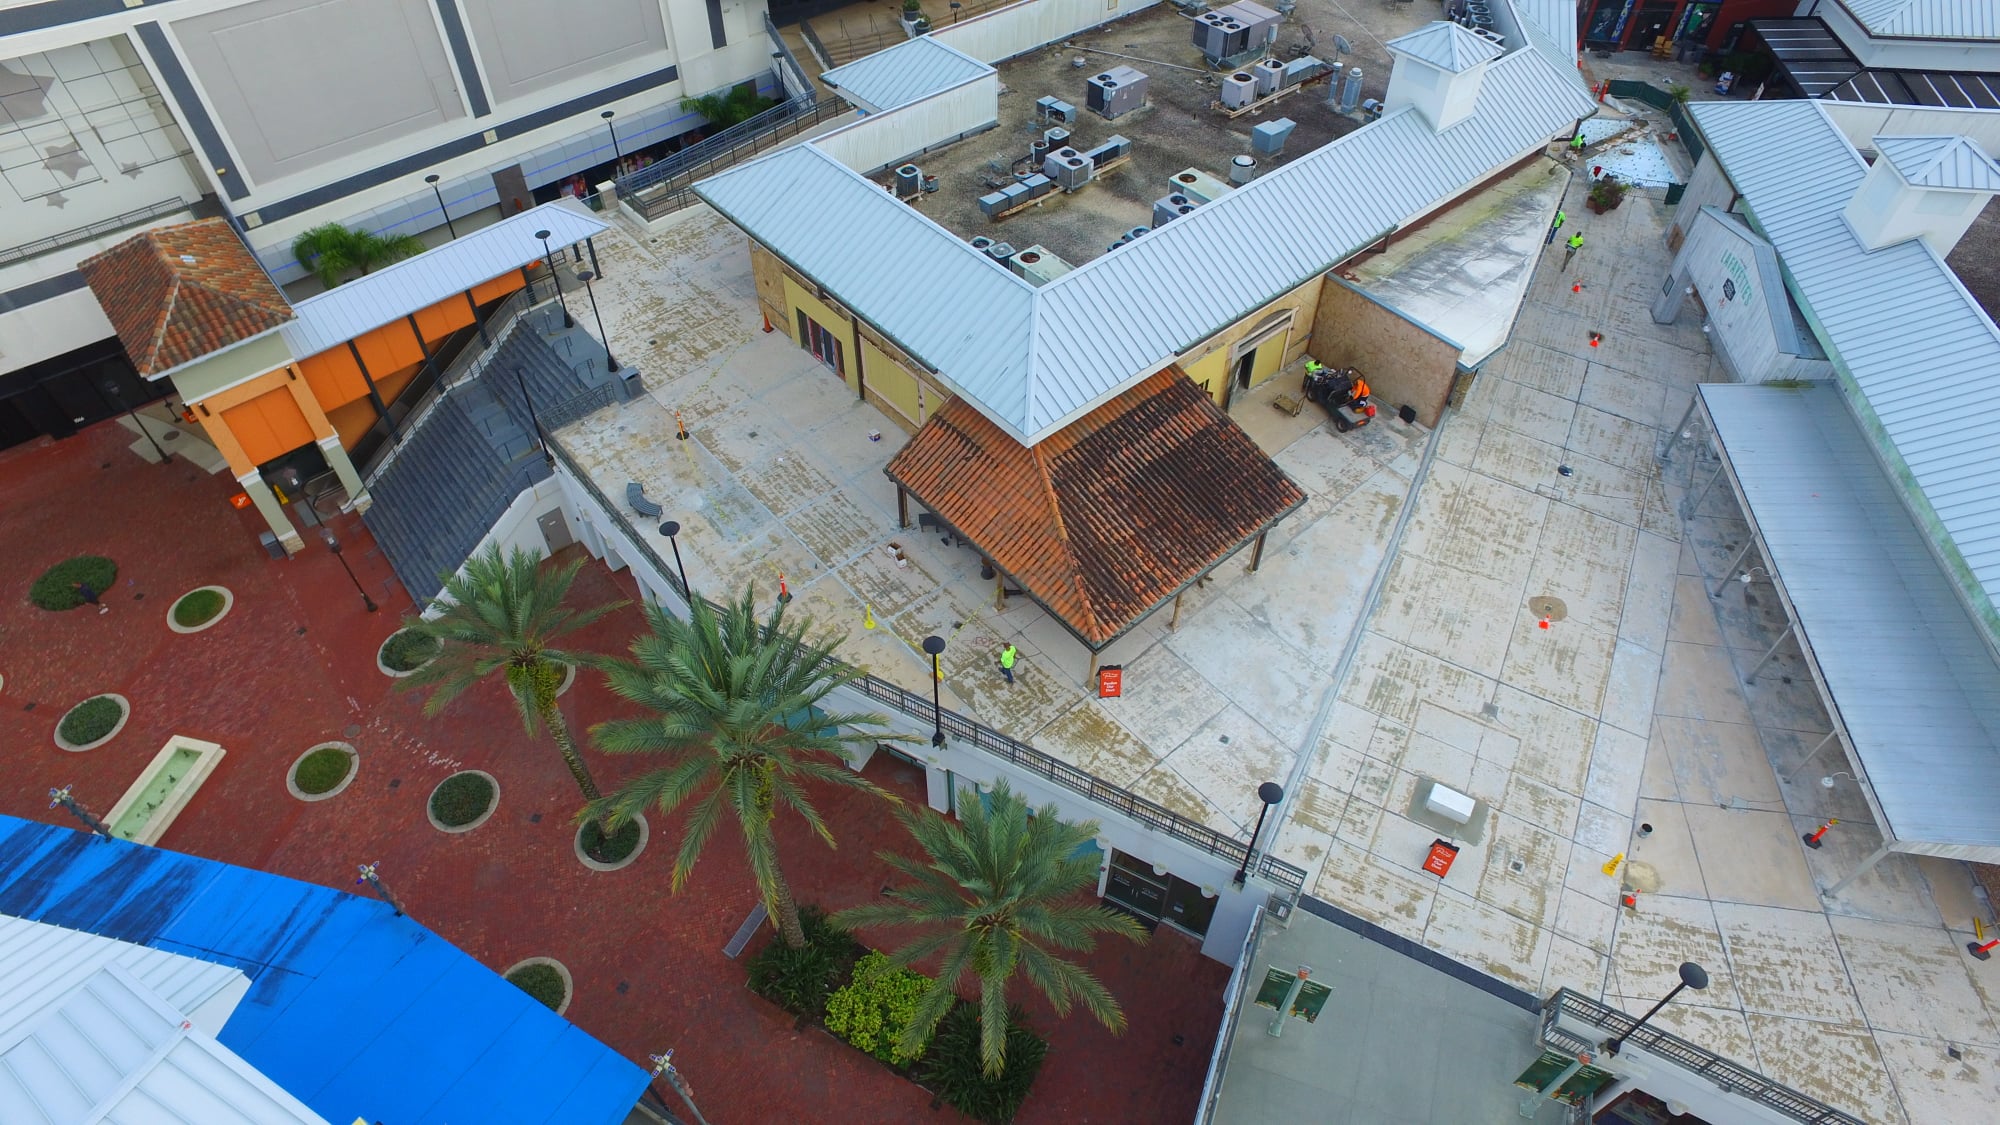 Pointe Orlando Plaza Deck Coating Installation In Progress_09